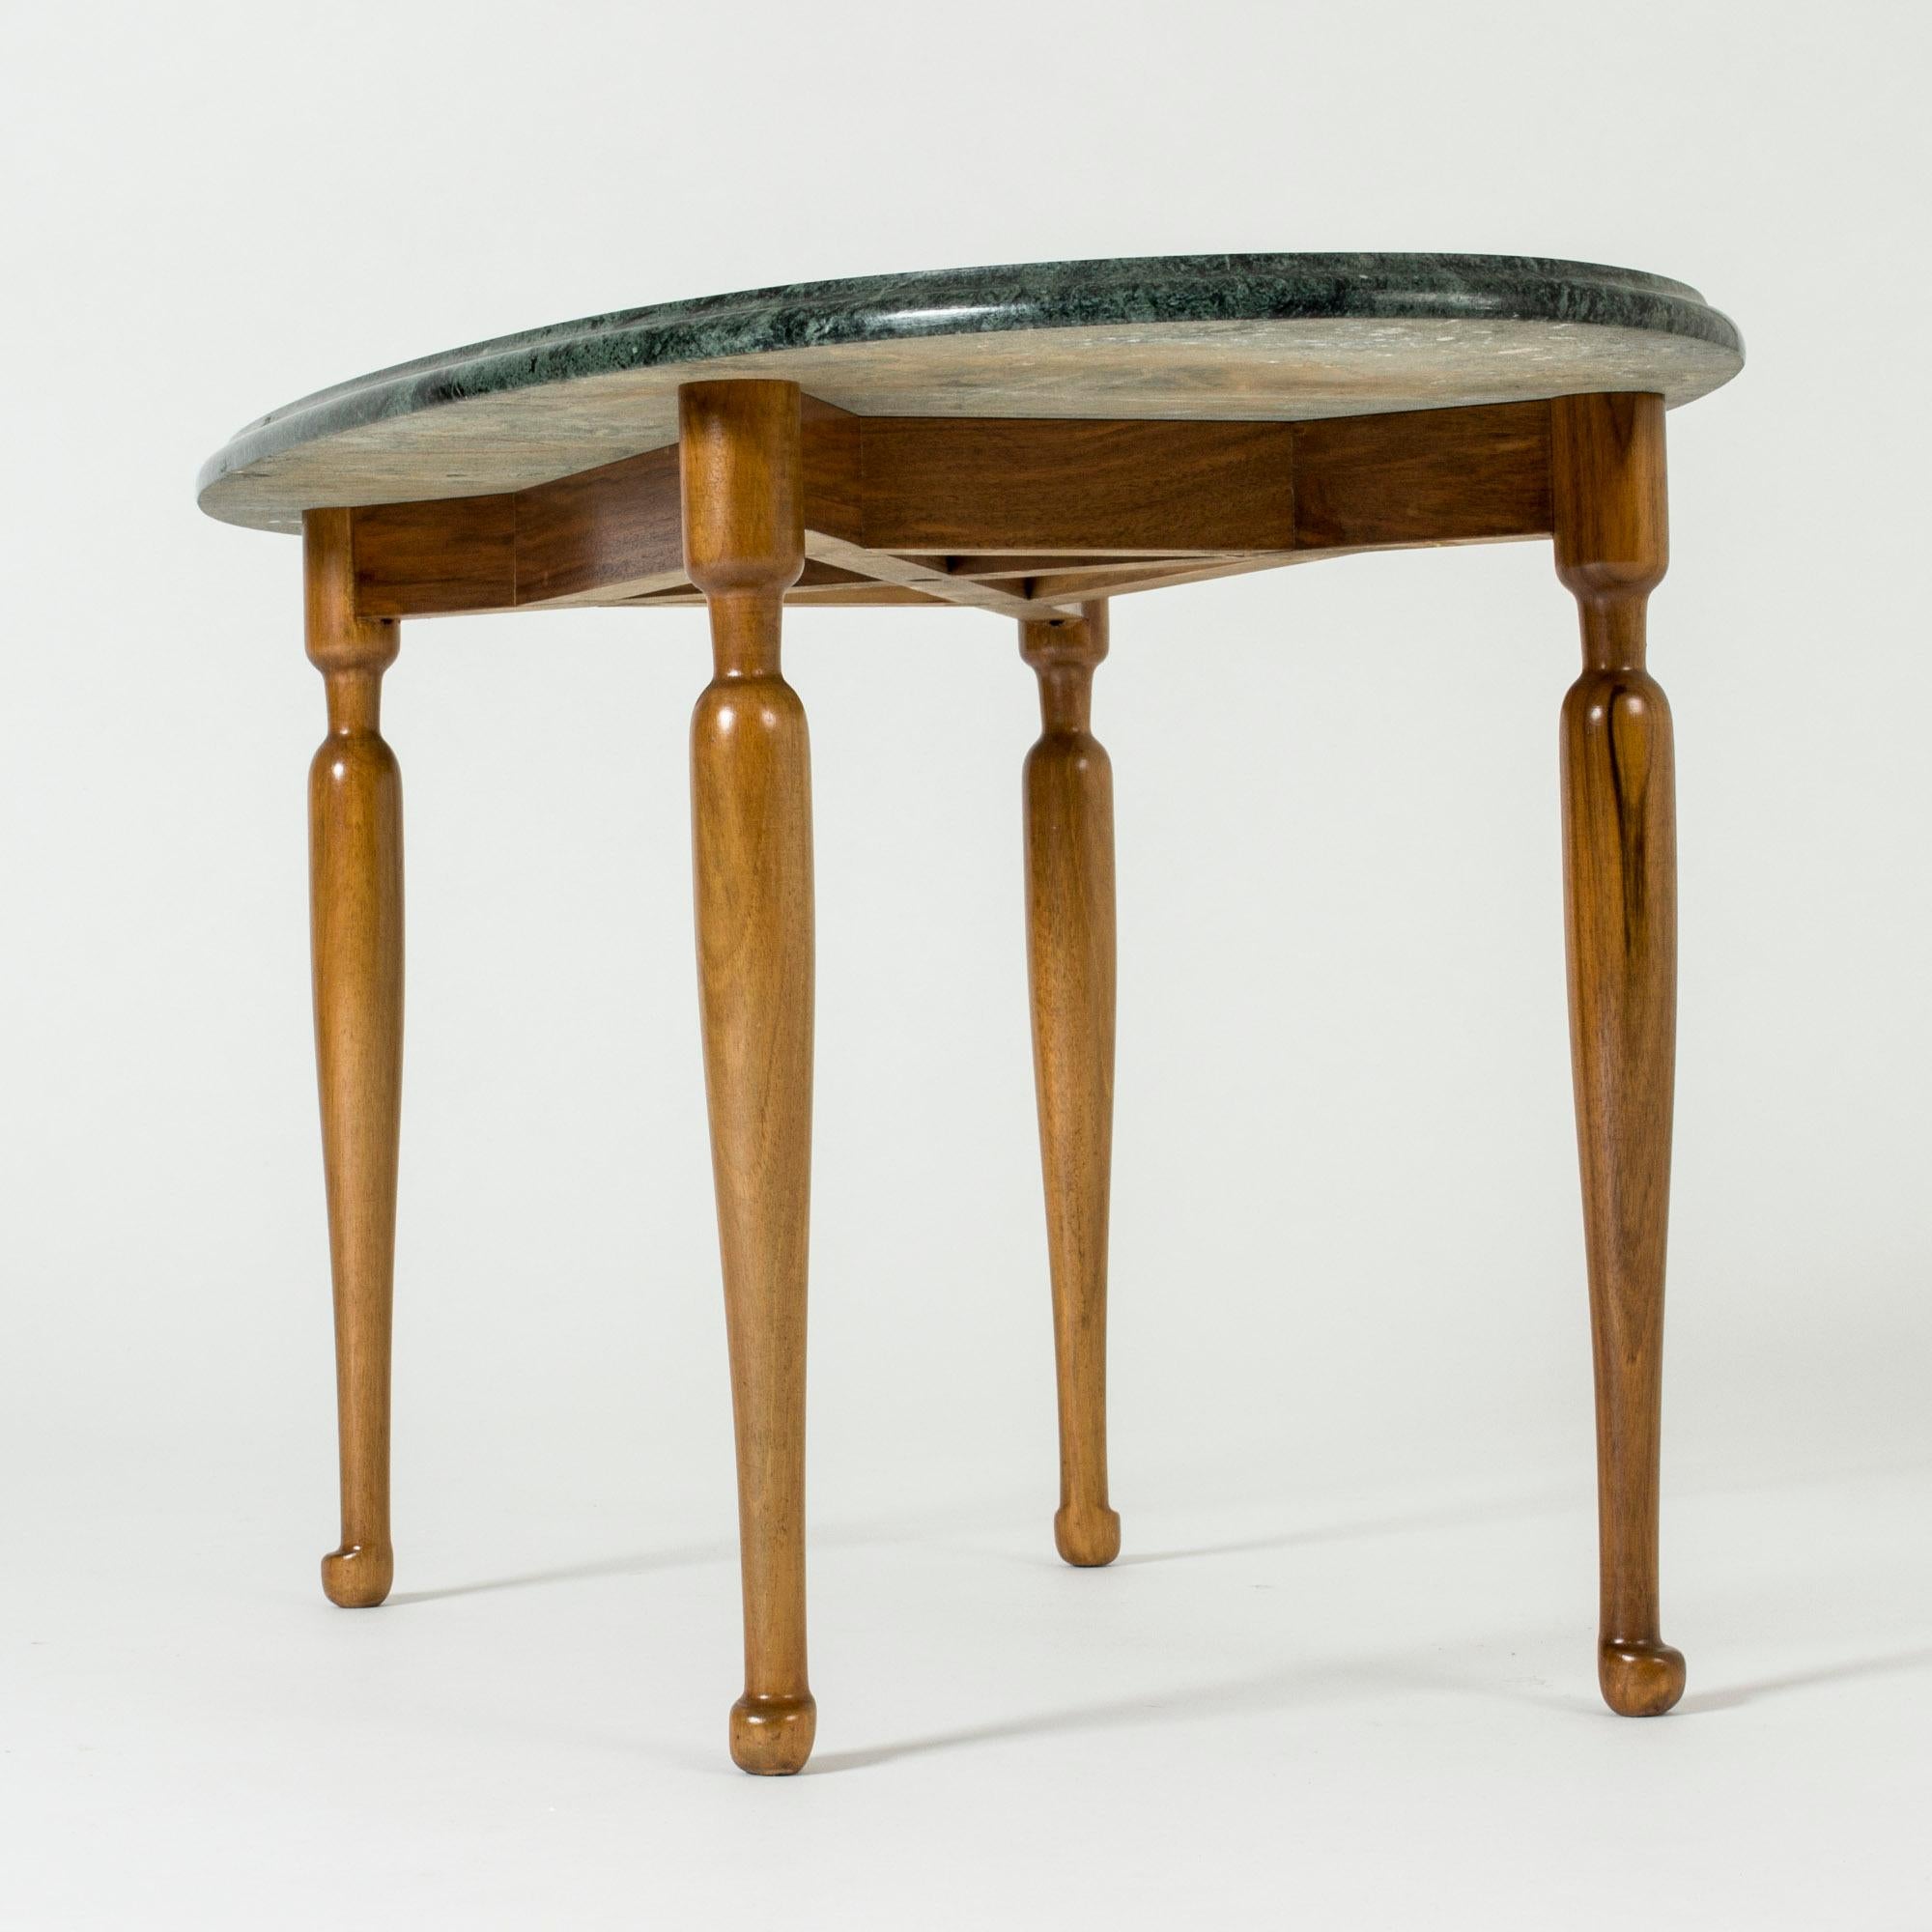 Swedish Marble and Mahogany Side Table by Josef Frank for Svenskt Tenn, Sweden, 1950s For Sale